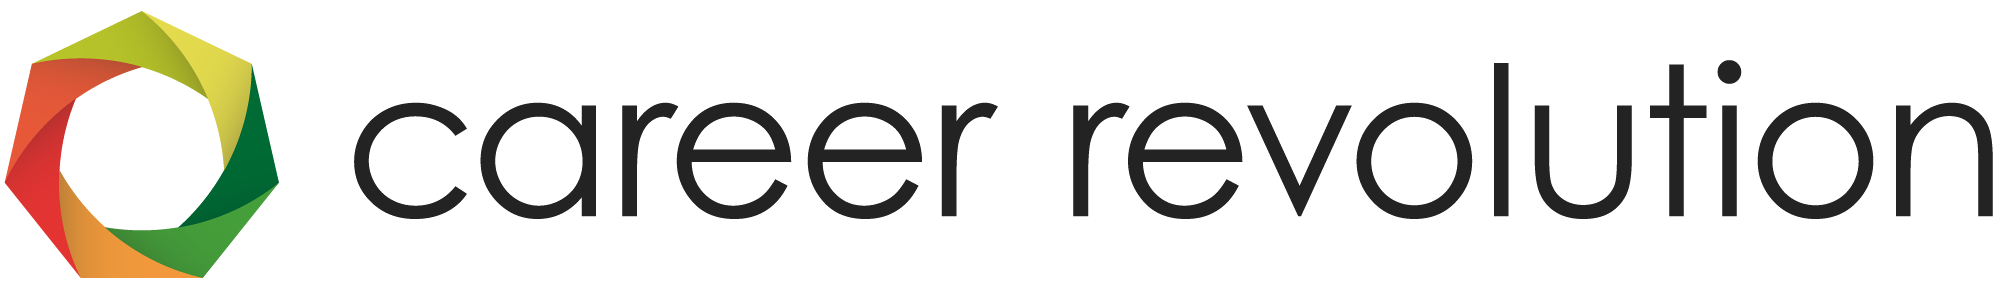 Career Revolution logo